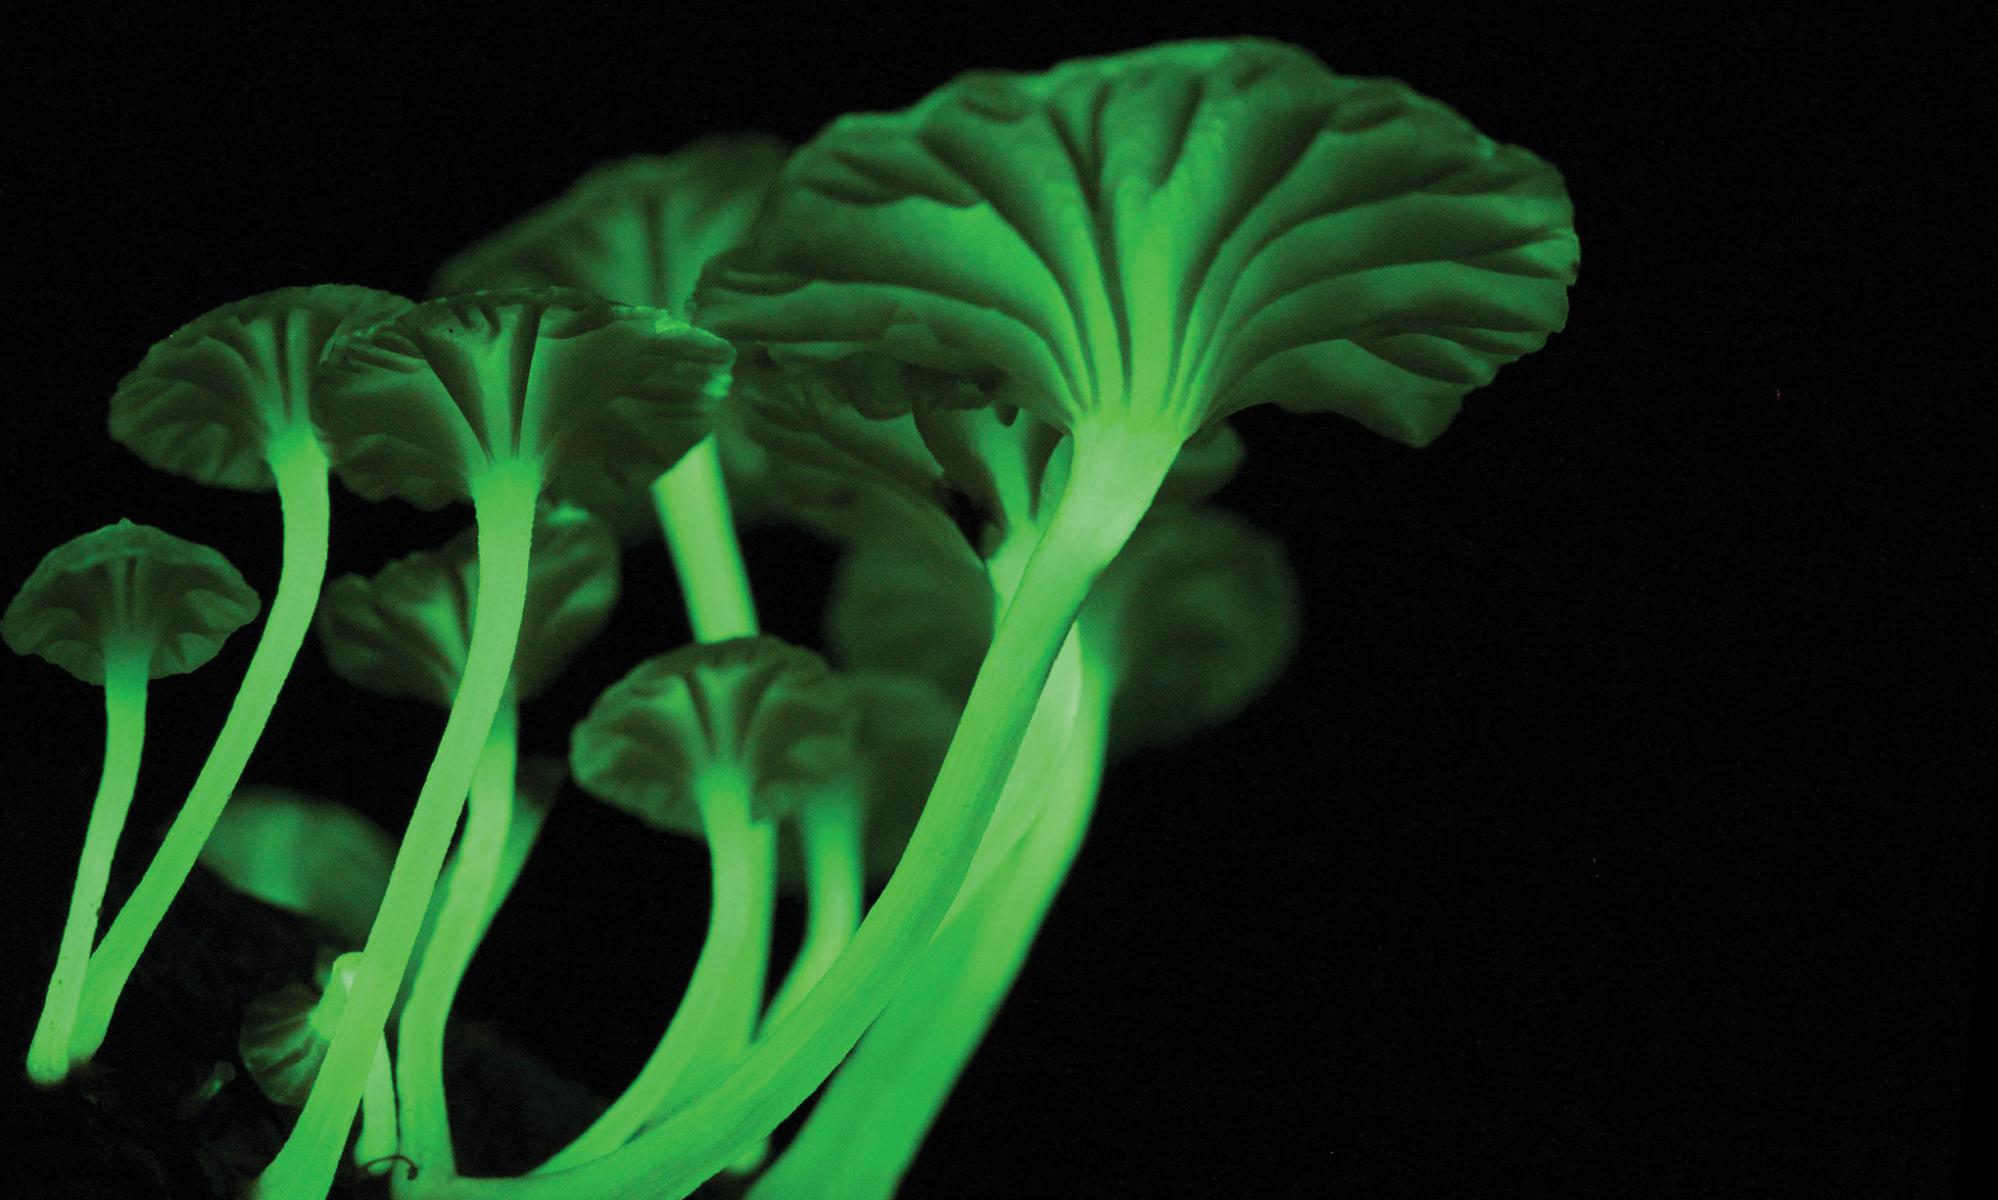 Green bioluminescent mushrooms